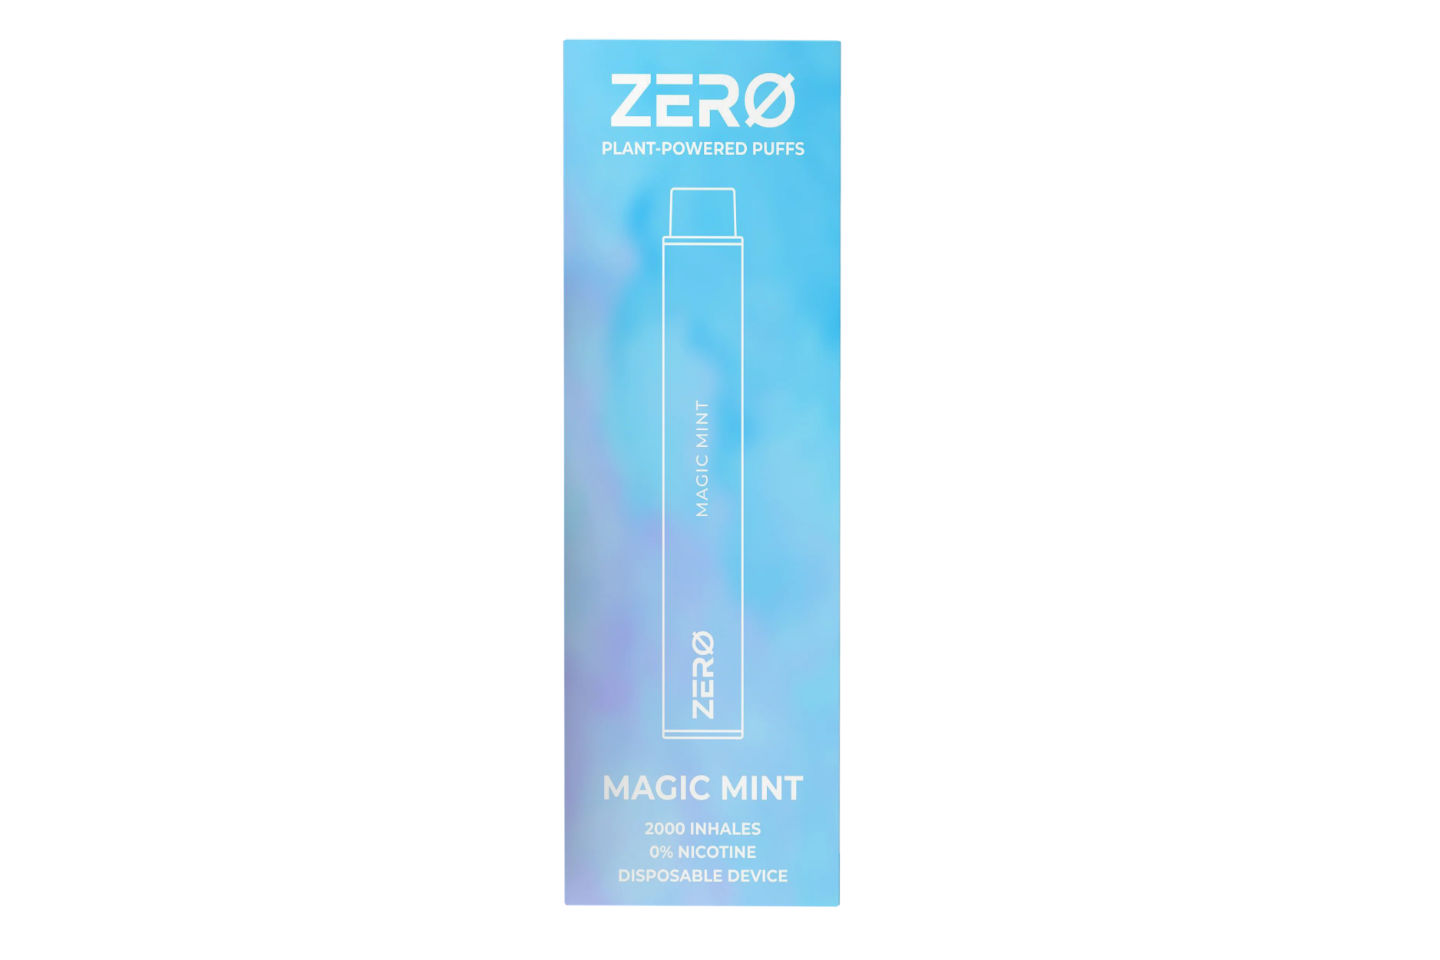 ZERO Air Aromatherapy Device in Magic Mint flavor